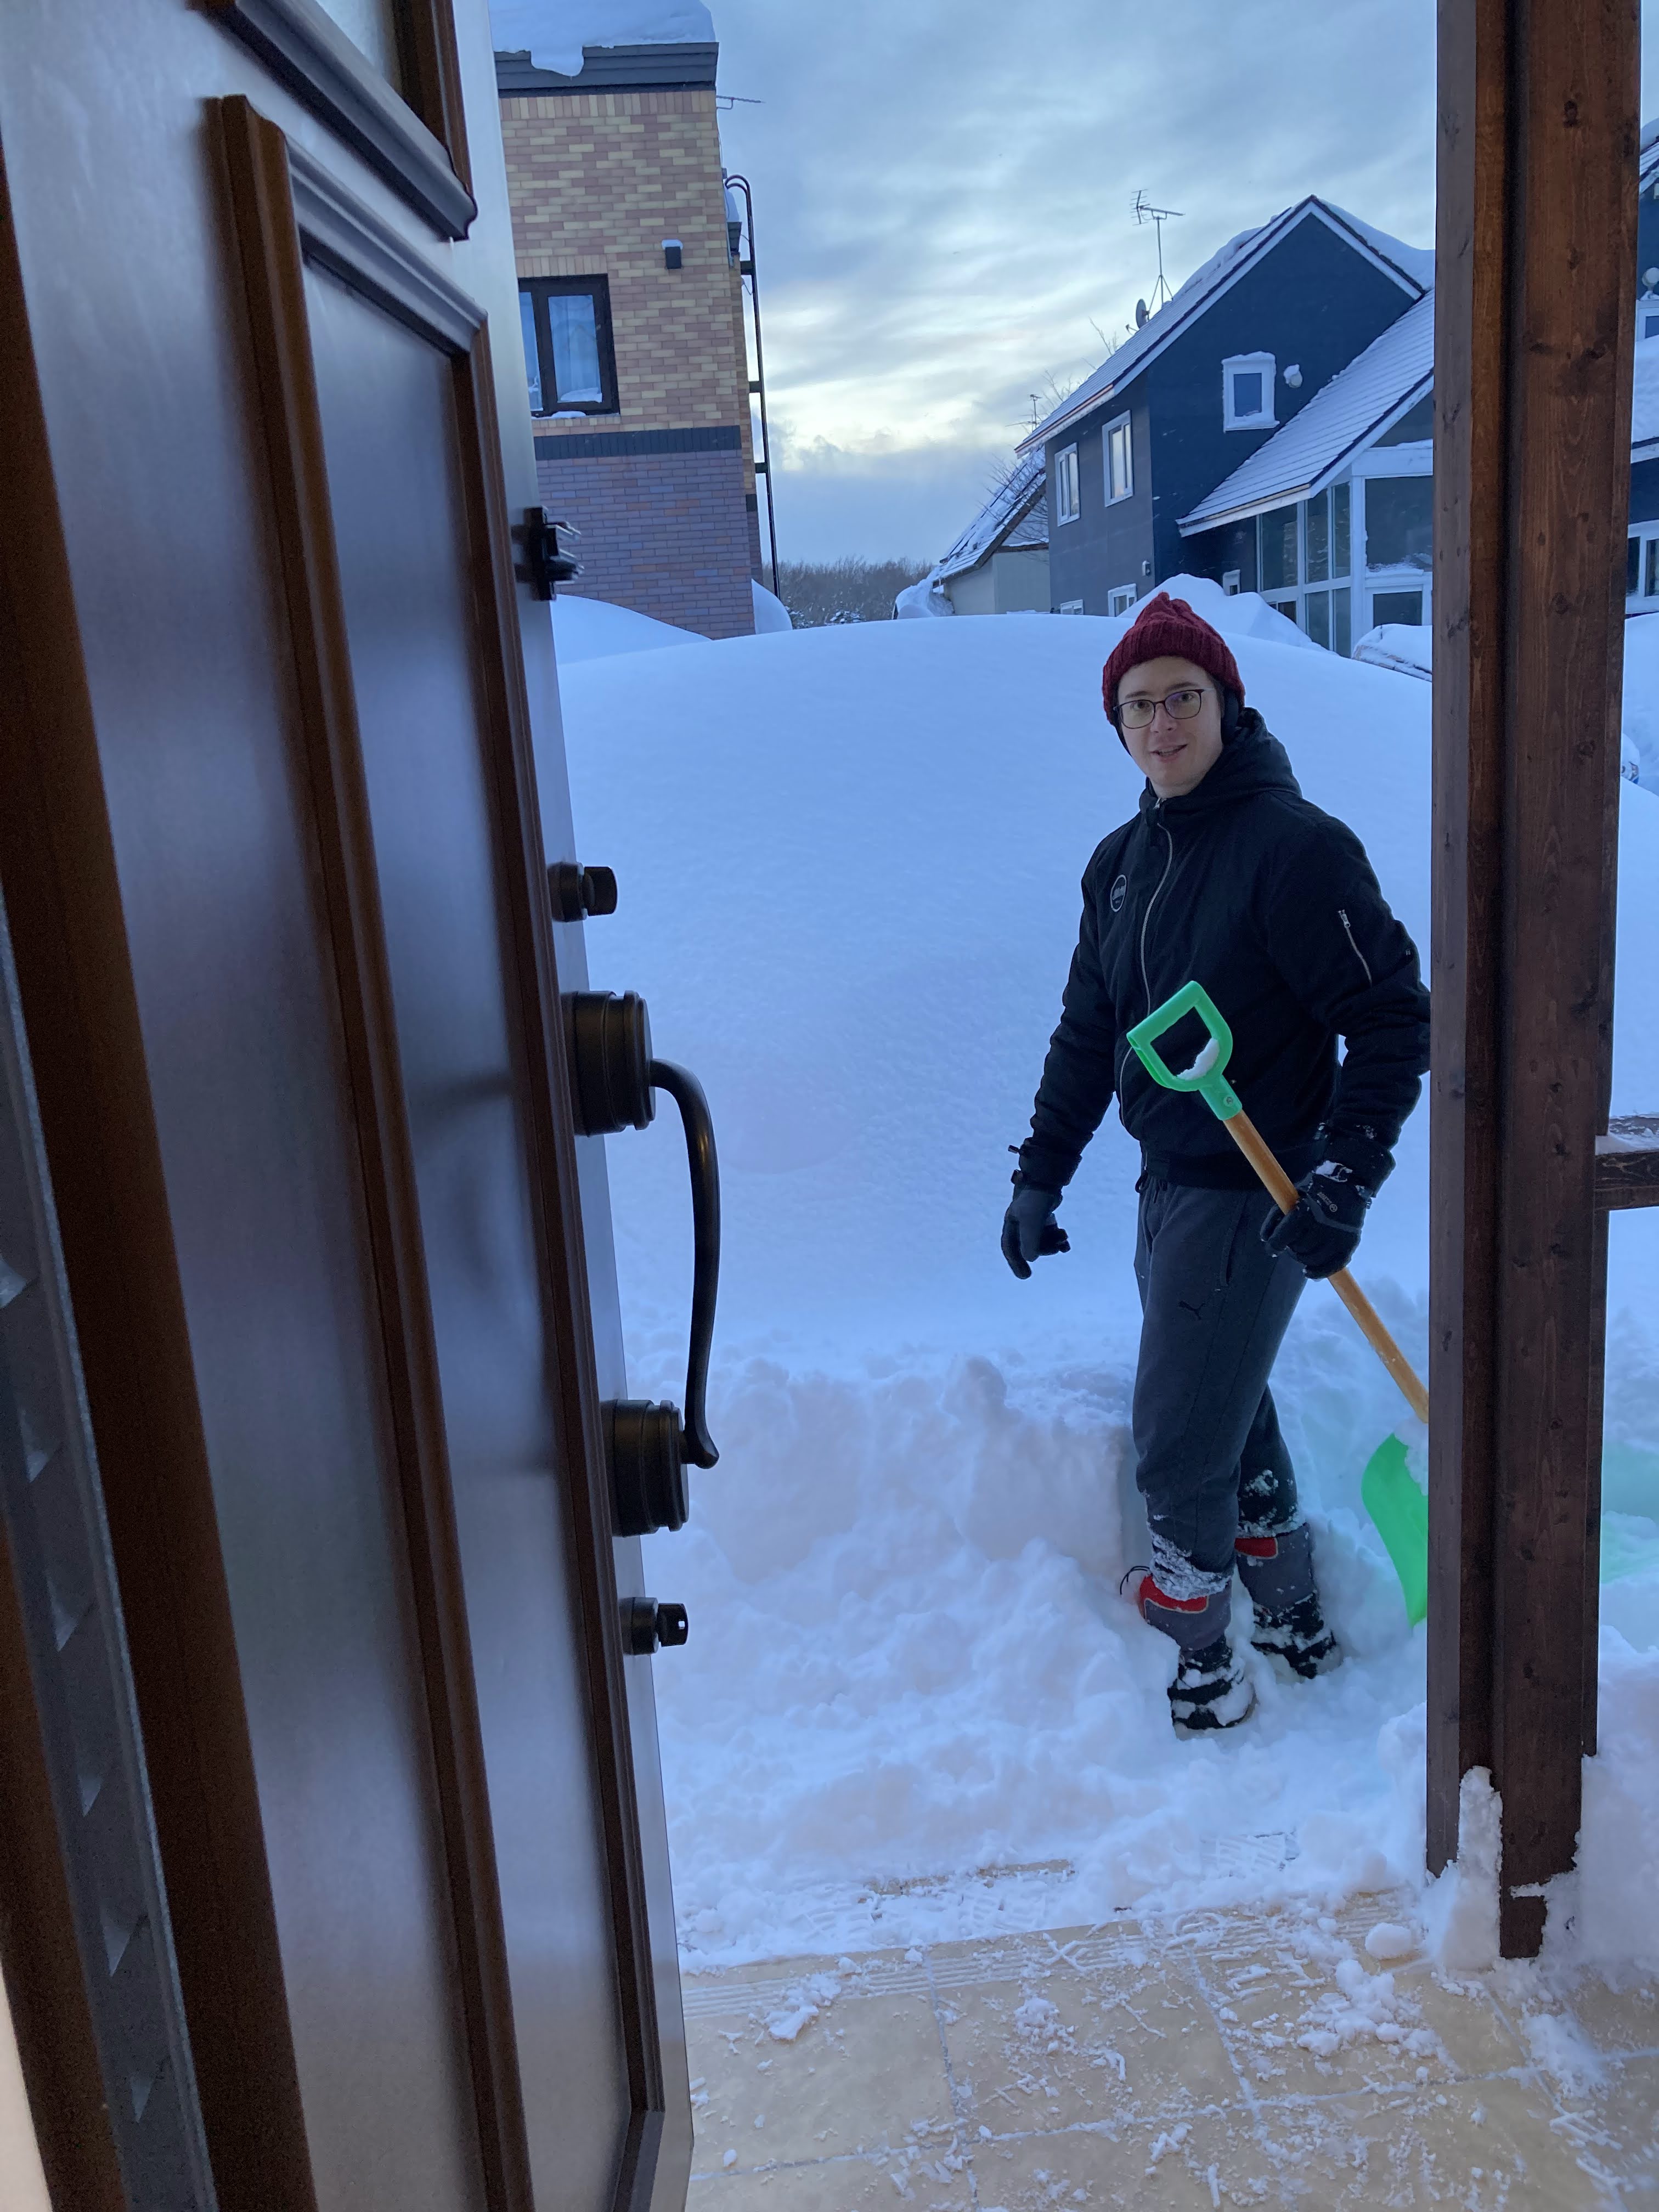 shovelling over 40cm of snow